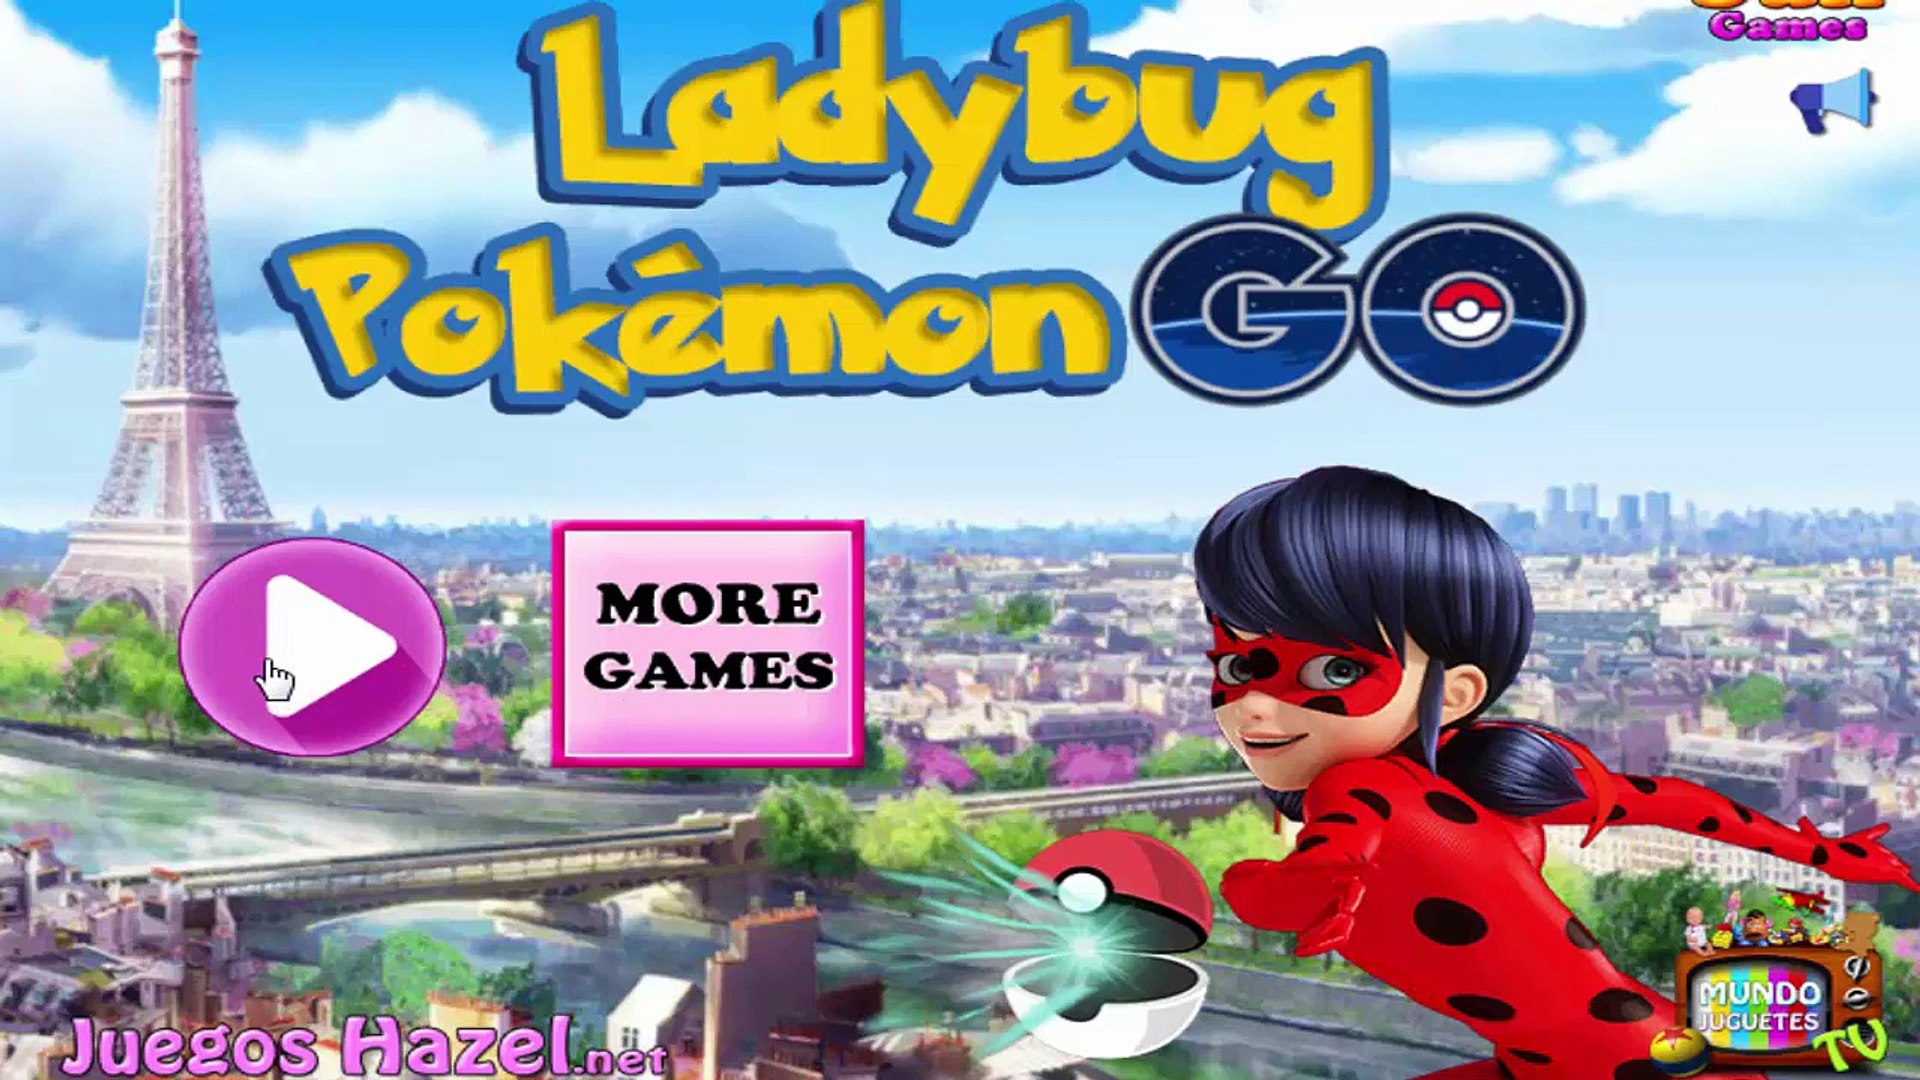 Ladybug Pokemon Go - Miraculous Ladybug Video Games For Kids